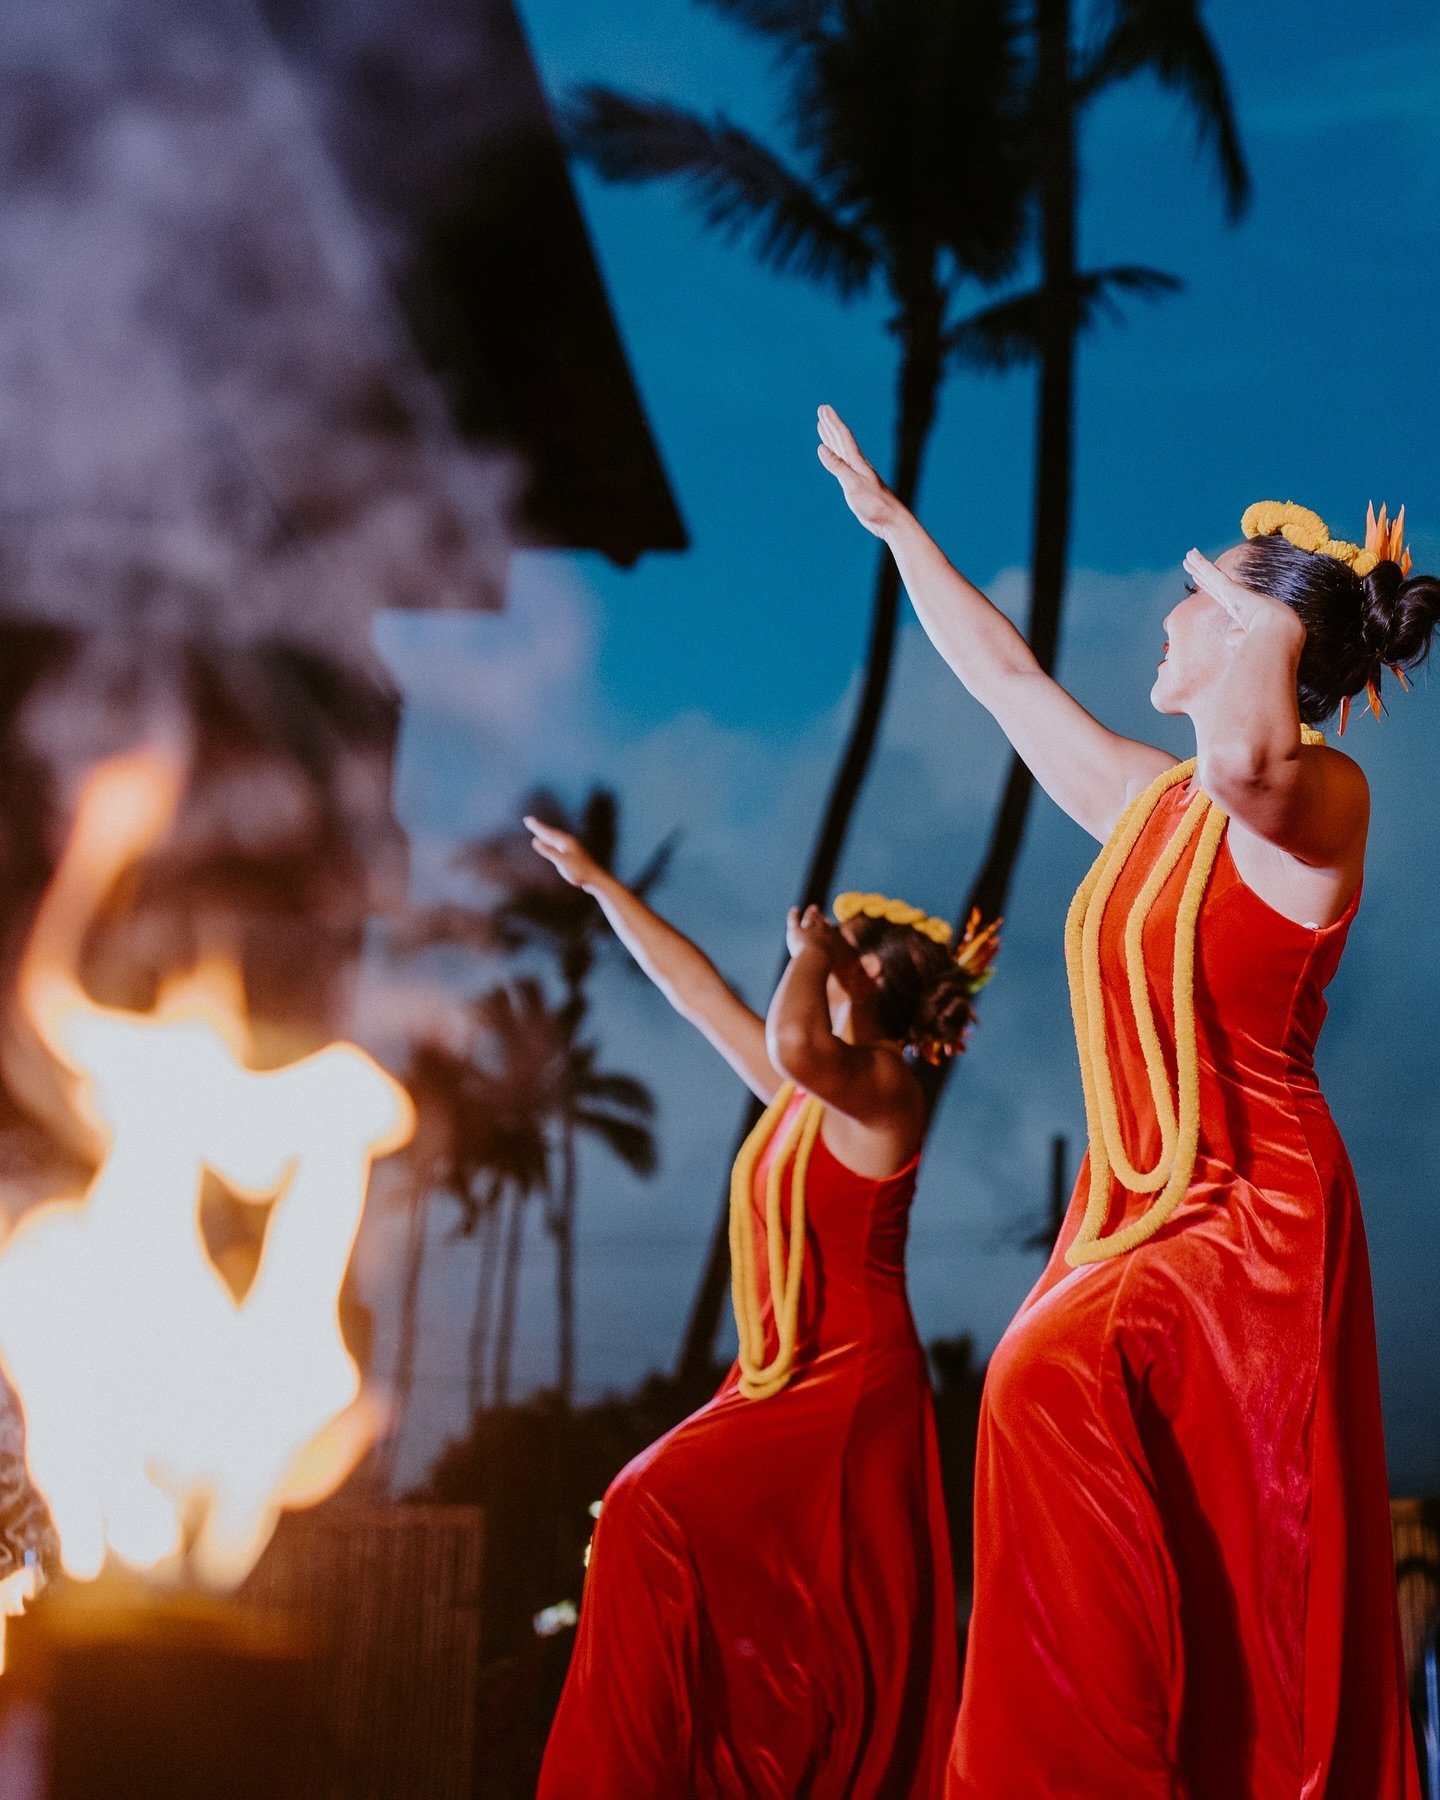 Hula holds the stories of old Hawai&rsquo;i 🔥&hearts;️

📷: @ashfabhawaii 

#AuliiLuau #Kauai #Hawaii #Poipu #Luau #KauaiExperience #OceanfrontLuau #HawaiianCulture #IslandParadise